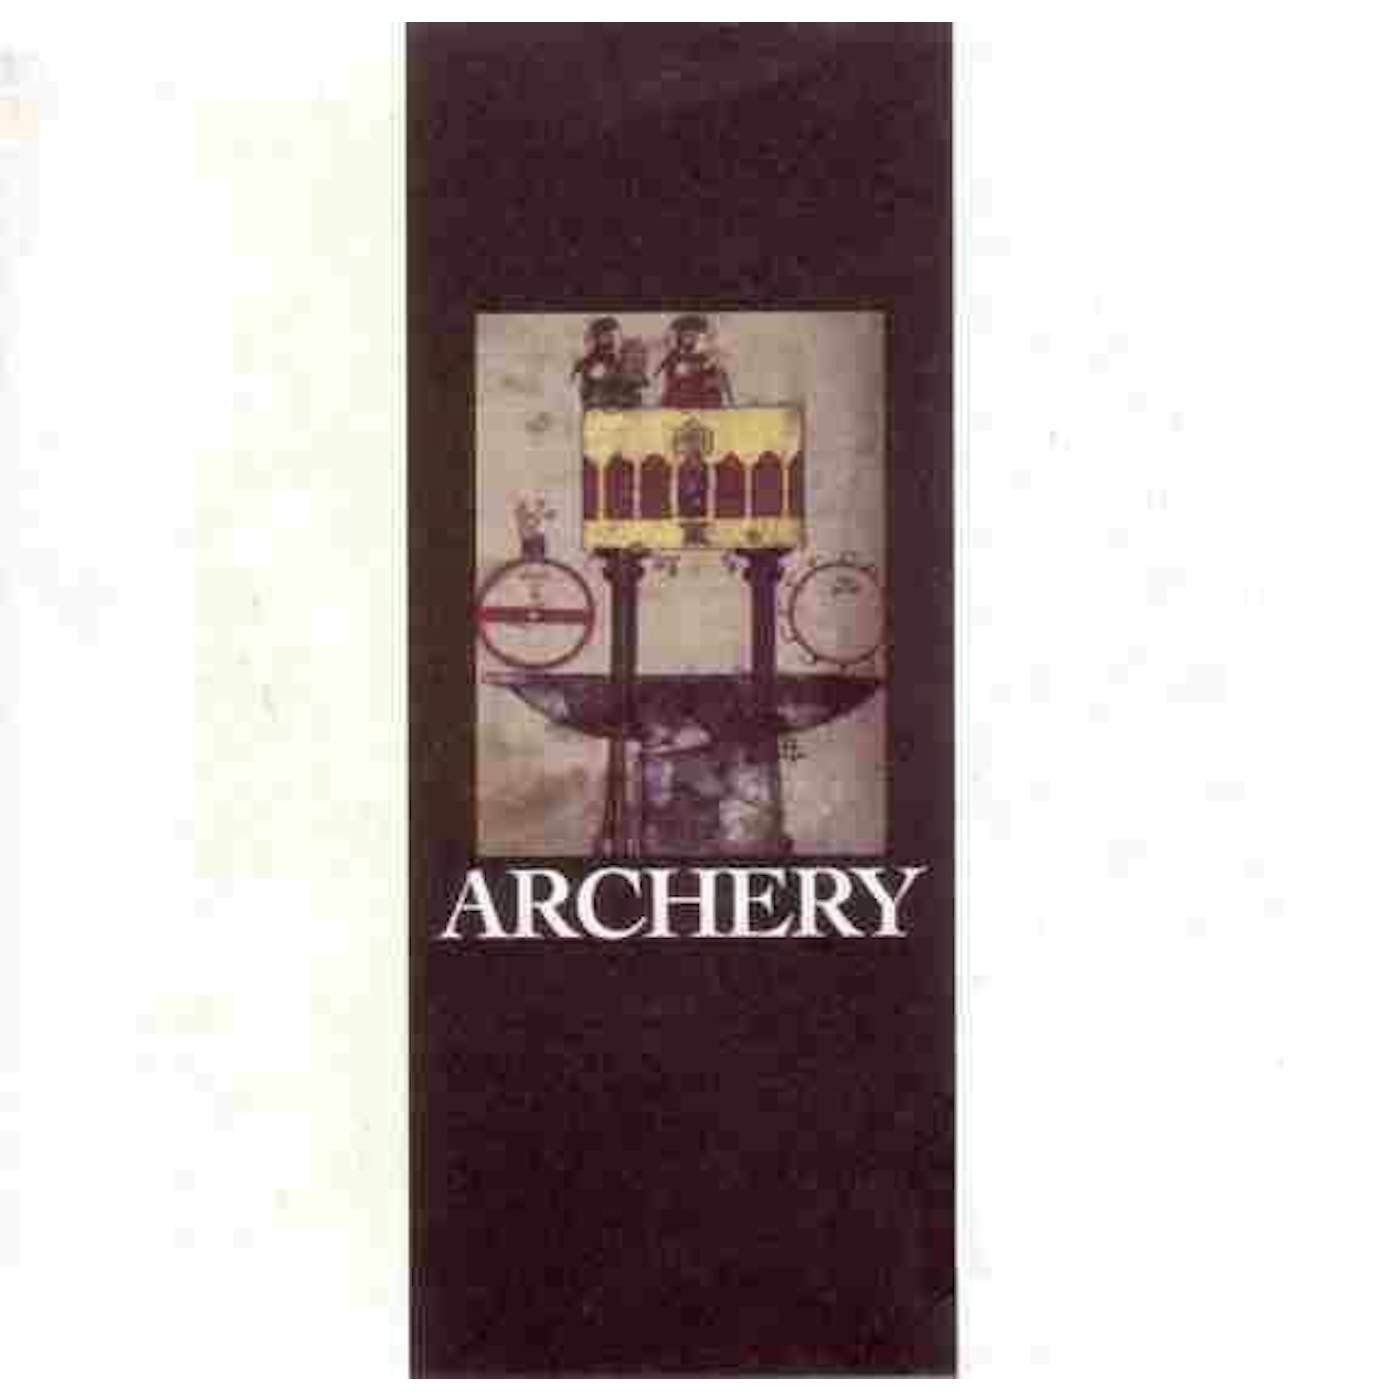 John Zorn ARCHERY CD